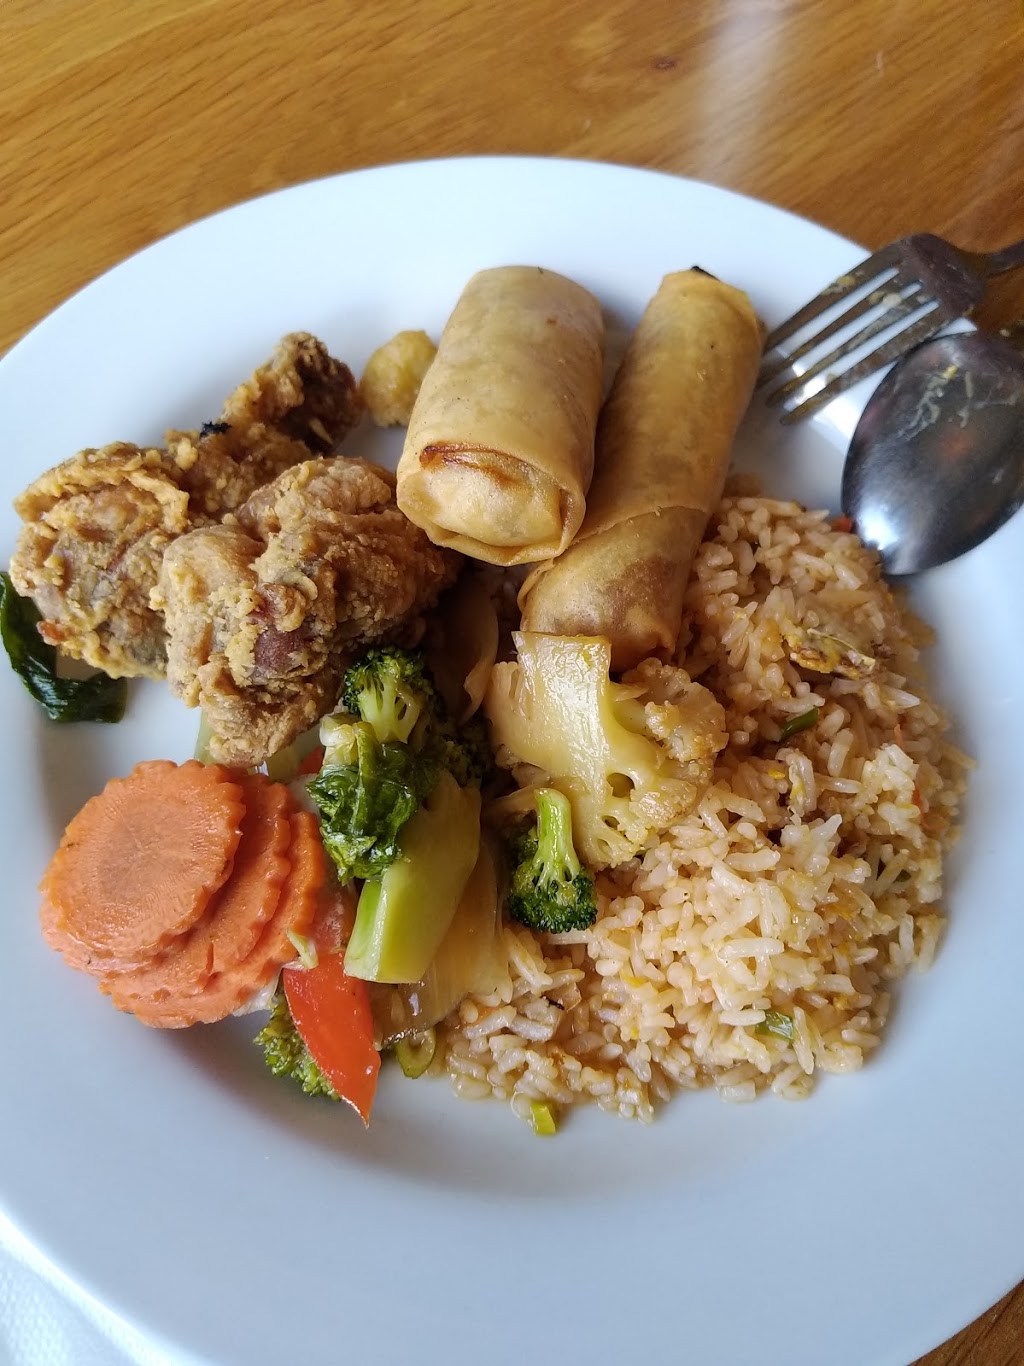 Thai Taste 2 | restaurant | Rockhampton Leagues Club, Cambridge St, Rockhampton City QLD 4700, Australia | 0749992668 OR +61 7 4999 2668